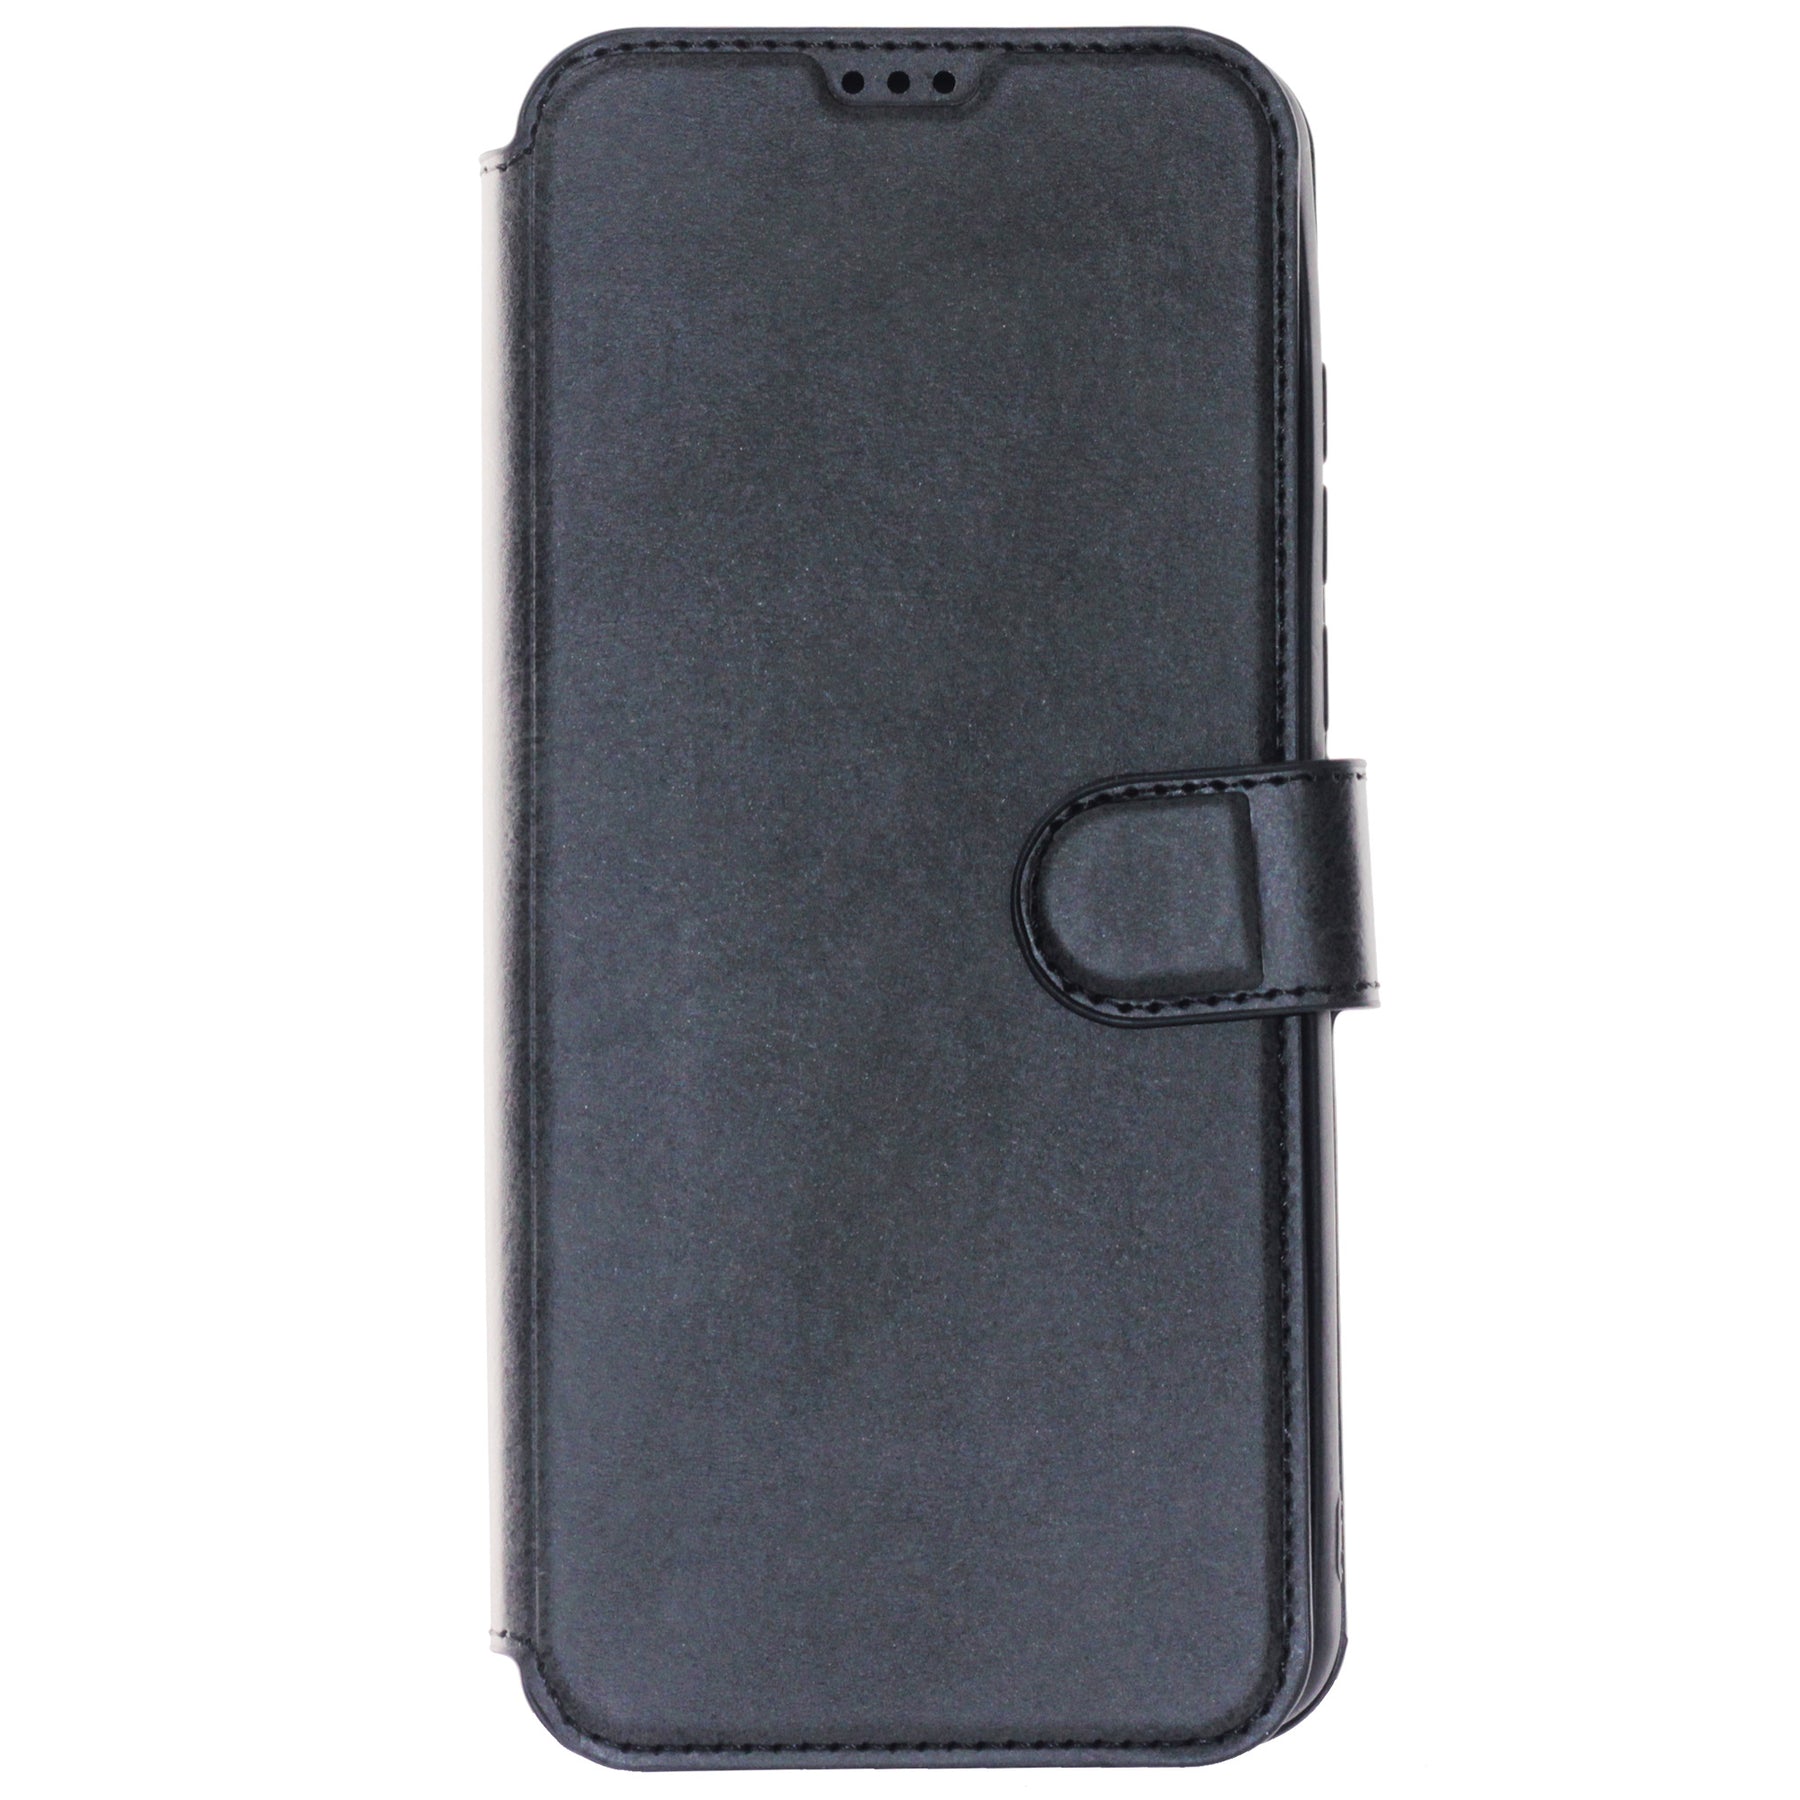 TCL 20SE black wallet case